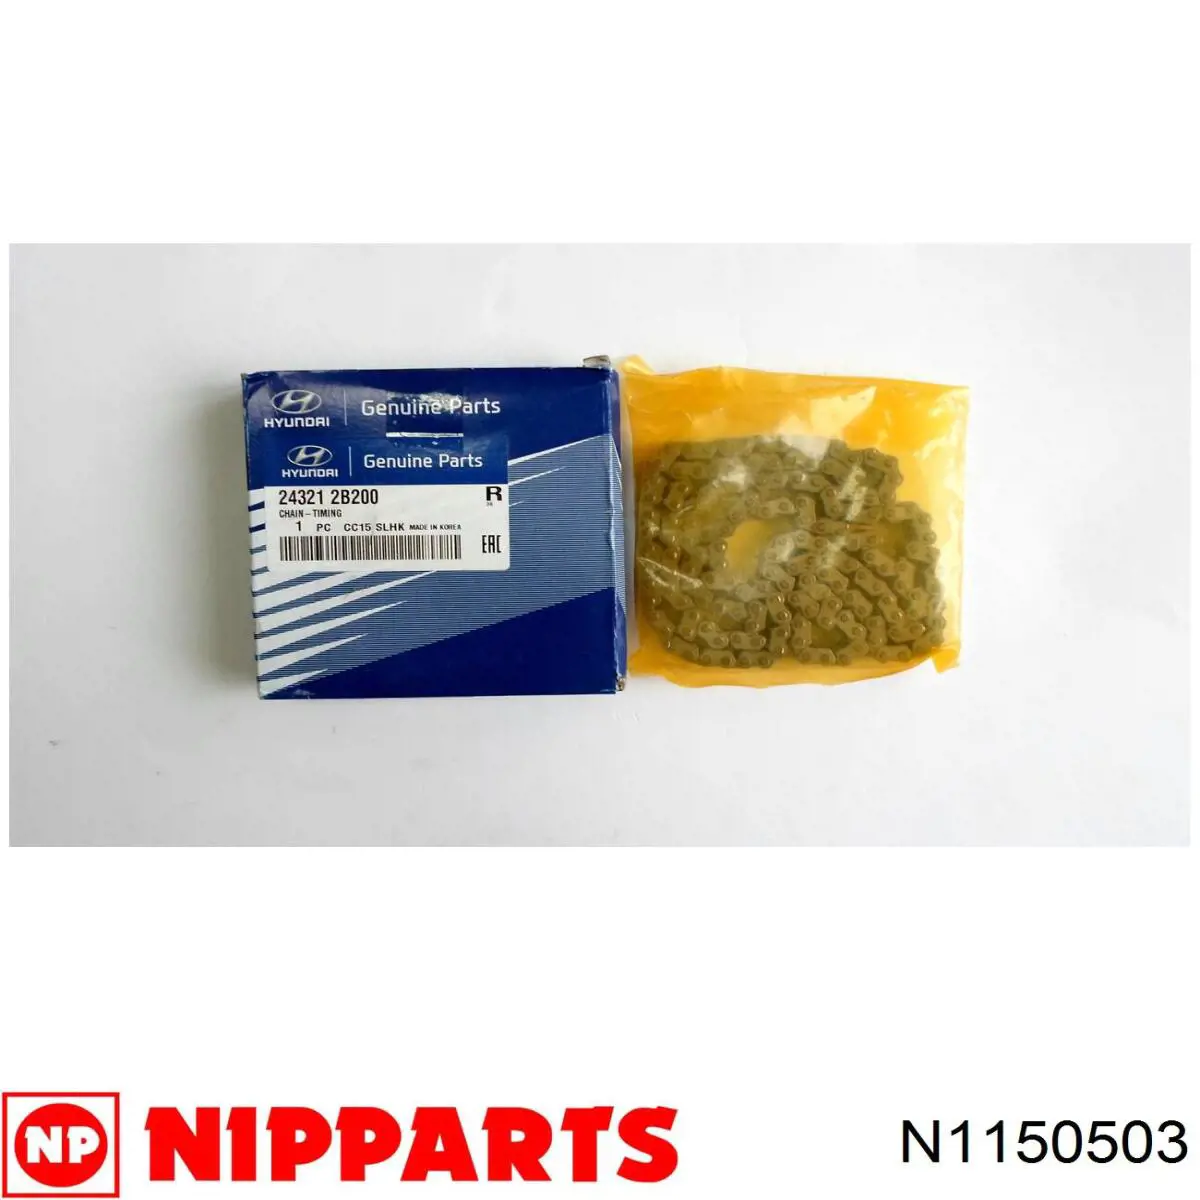 N1150503 Nipparts ланцюг грм, комплект